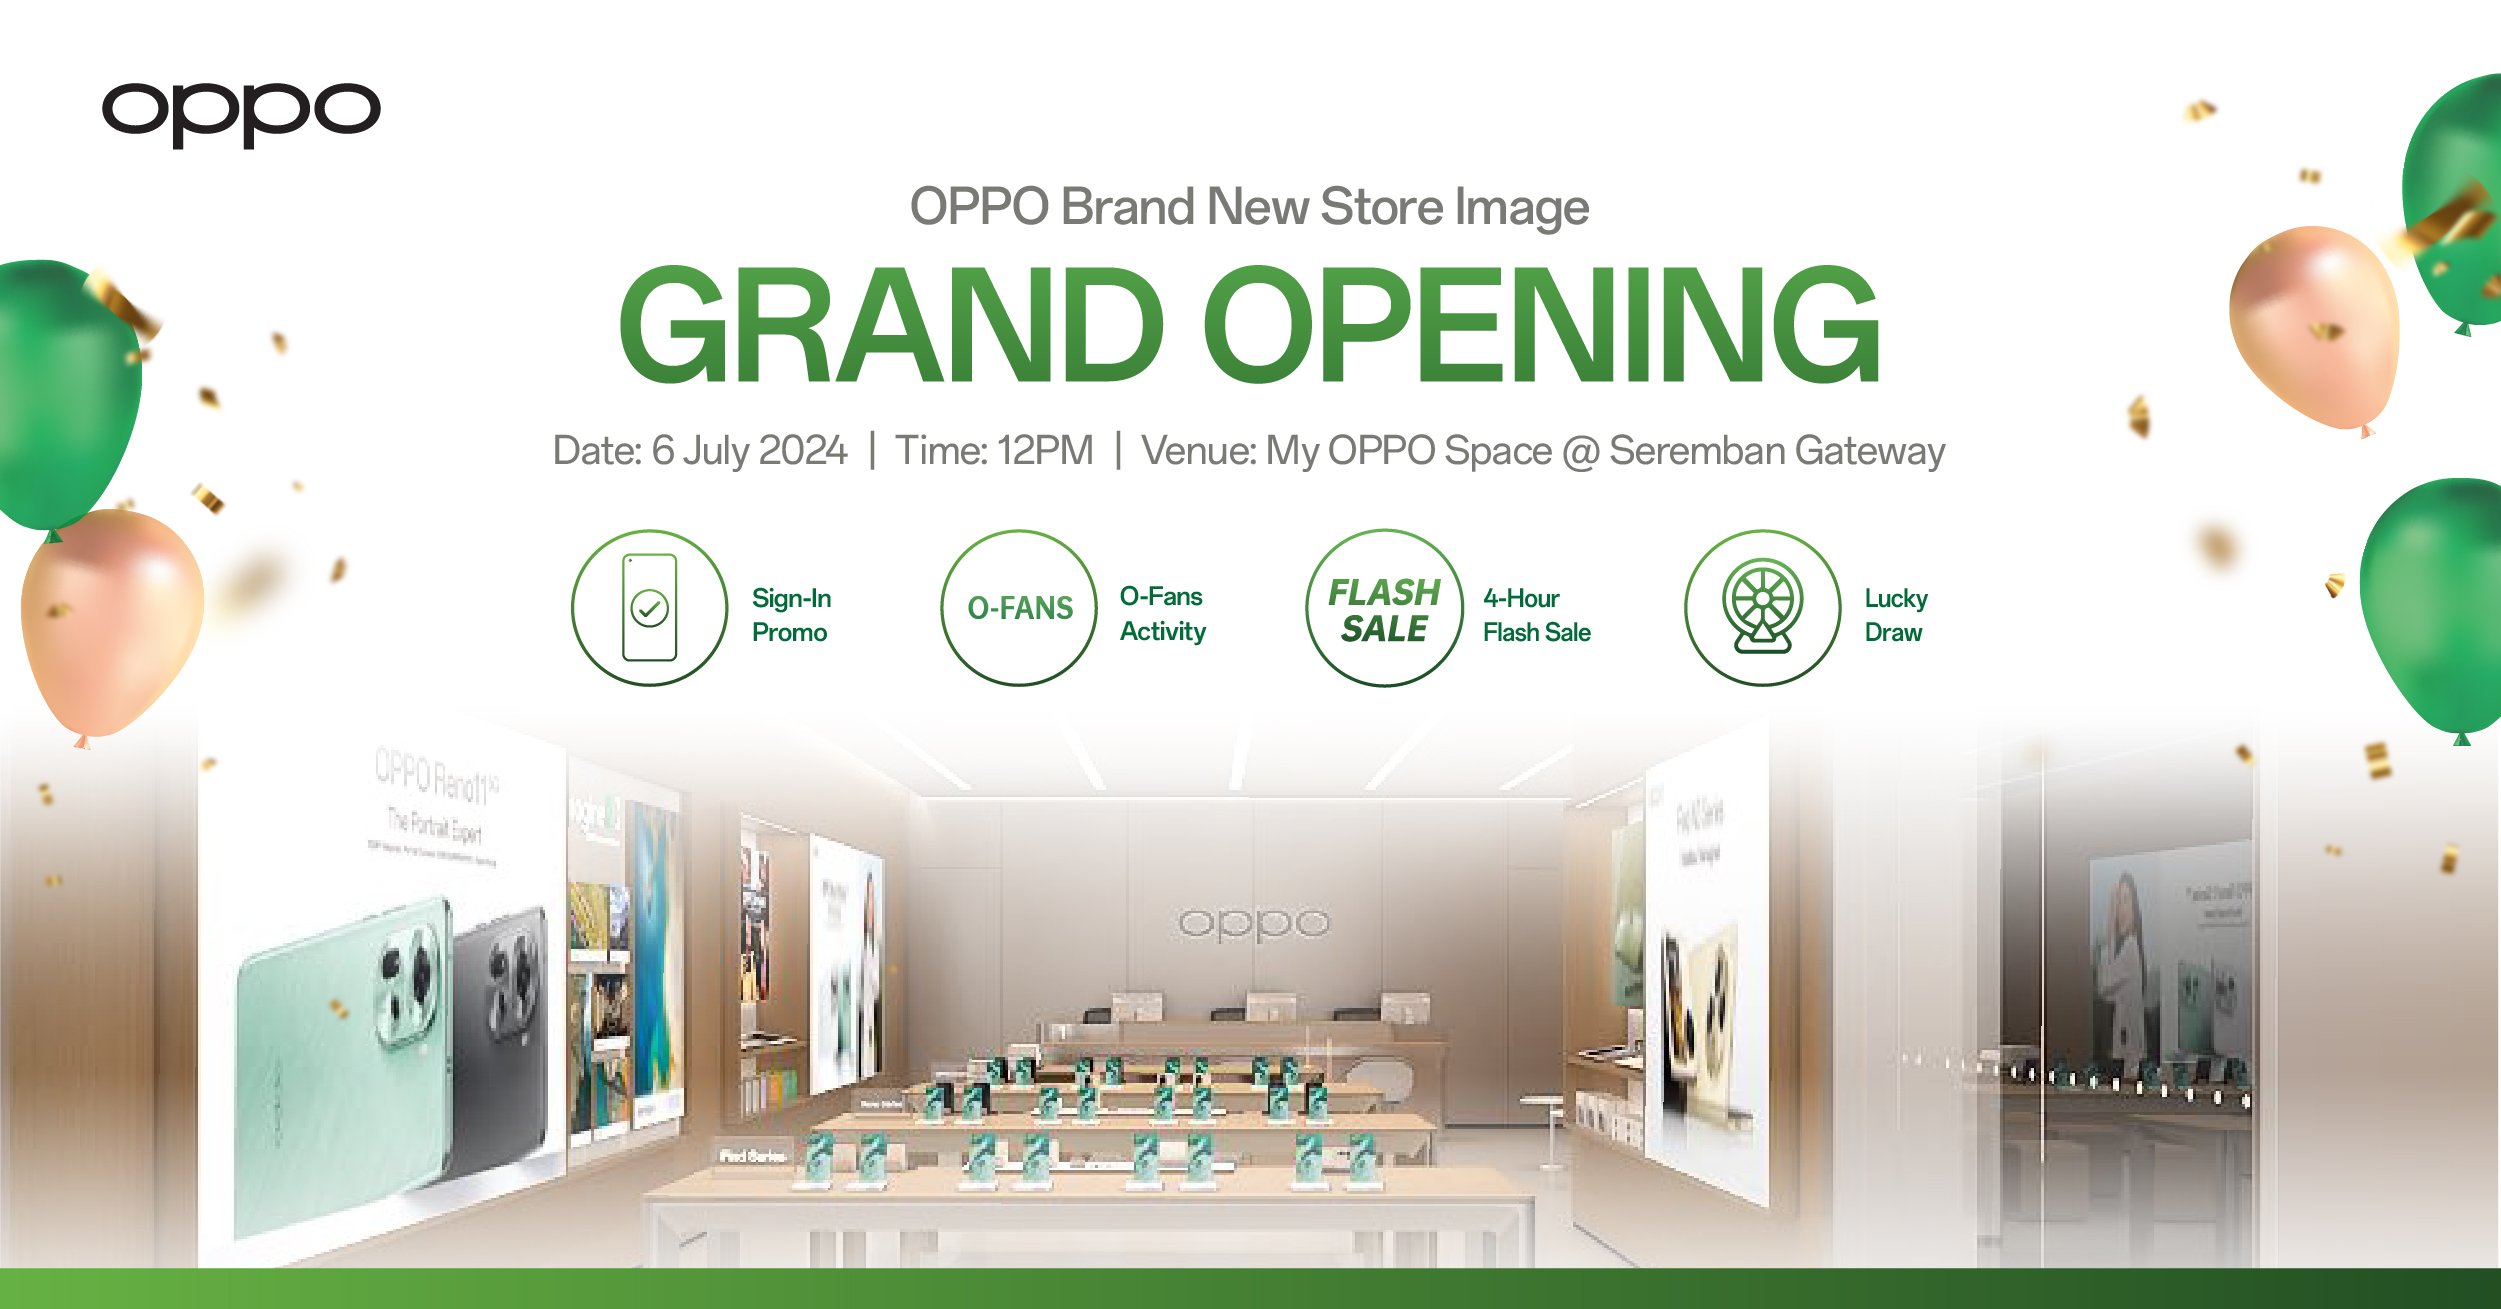 Grand Opening of My OPPO Space, Seremban Gateway